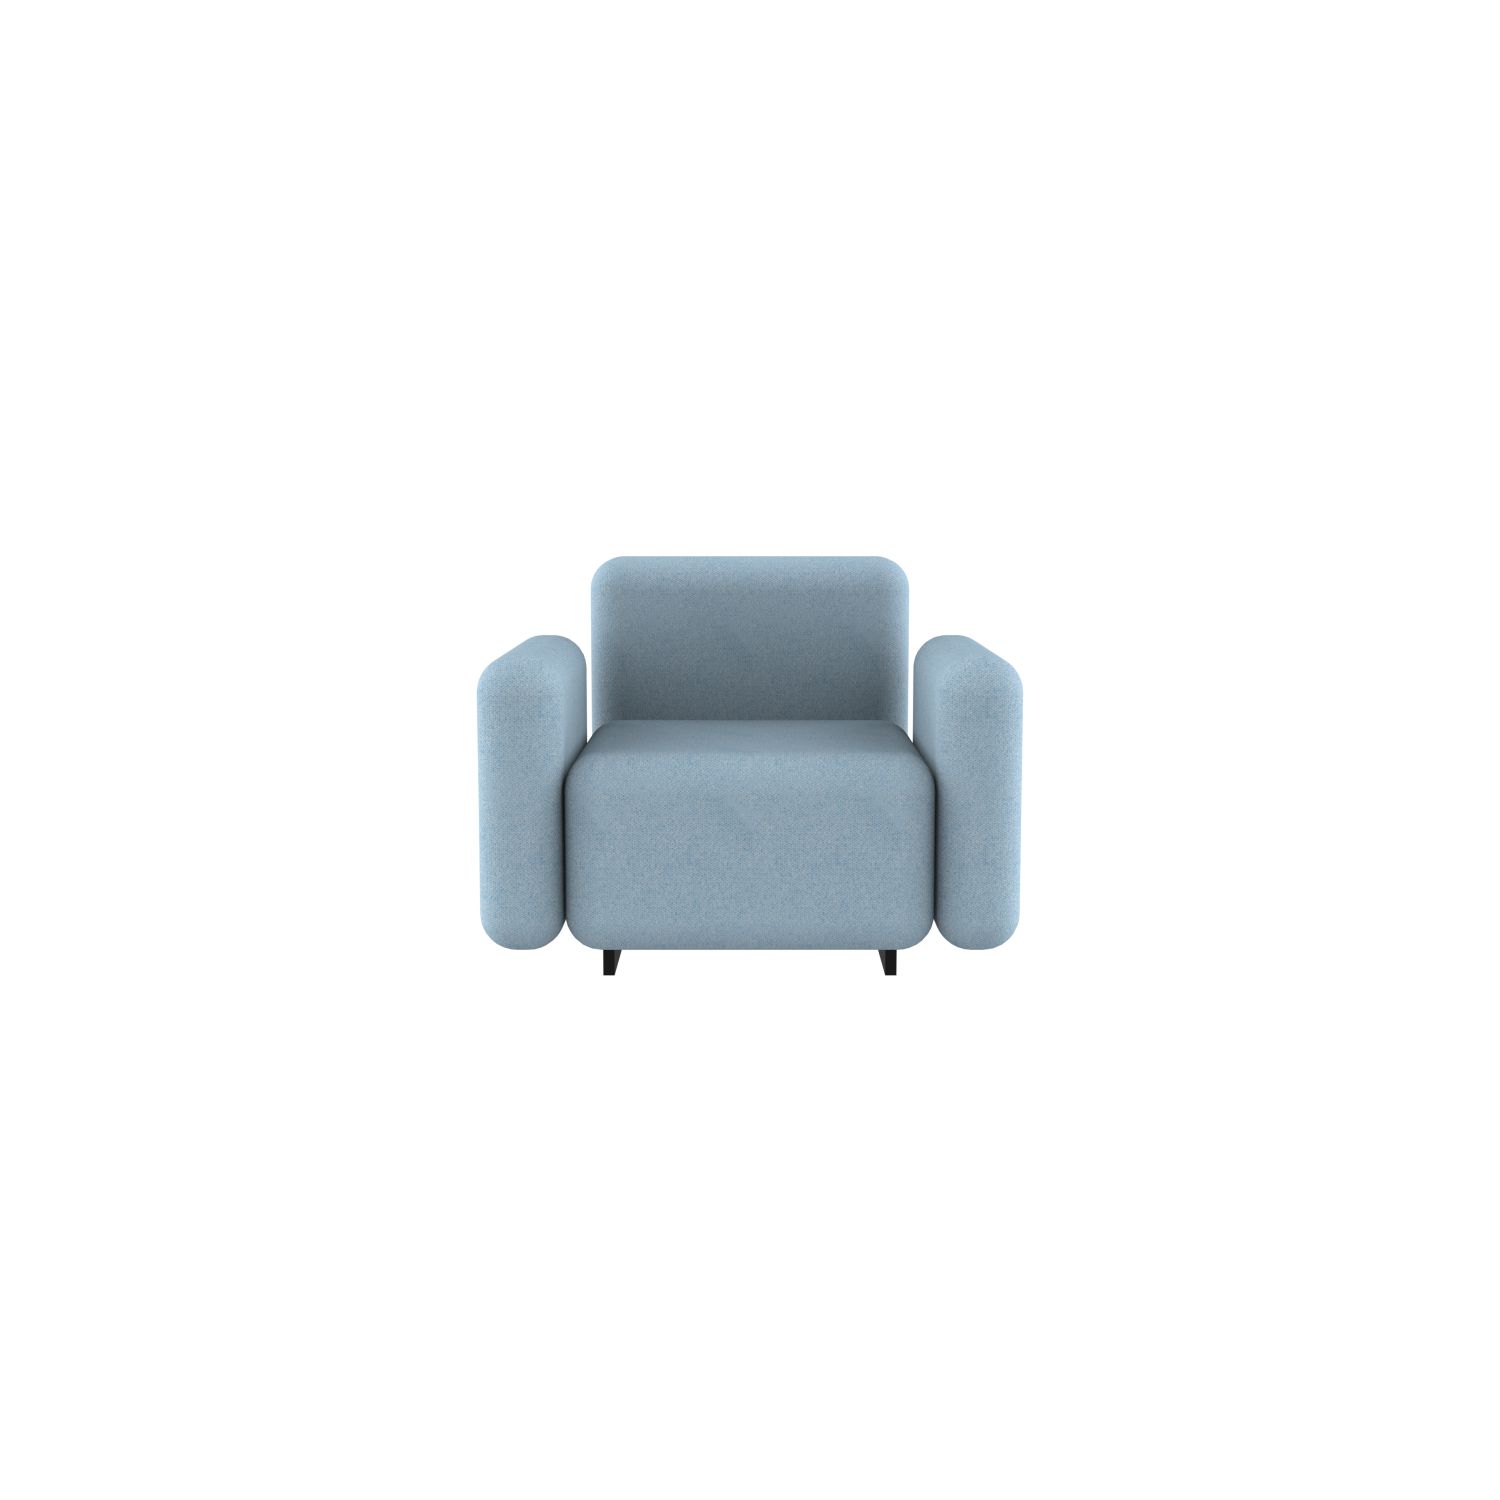 lensvelt fabio novembre balance armchair with armrest moss pastel blue 40 black ral9005